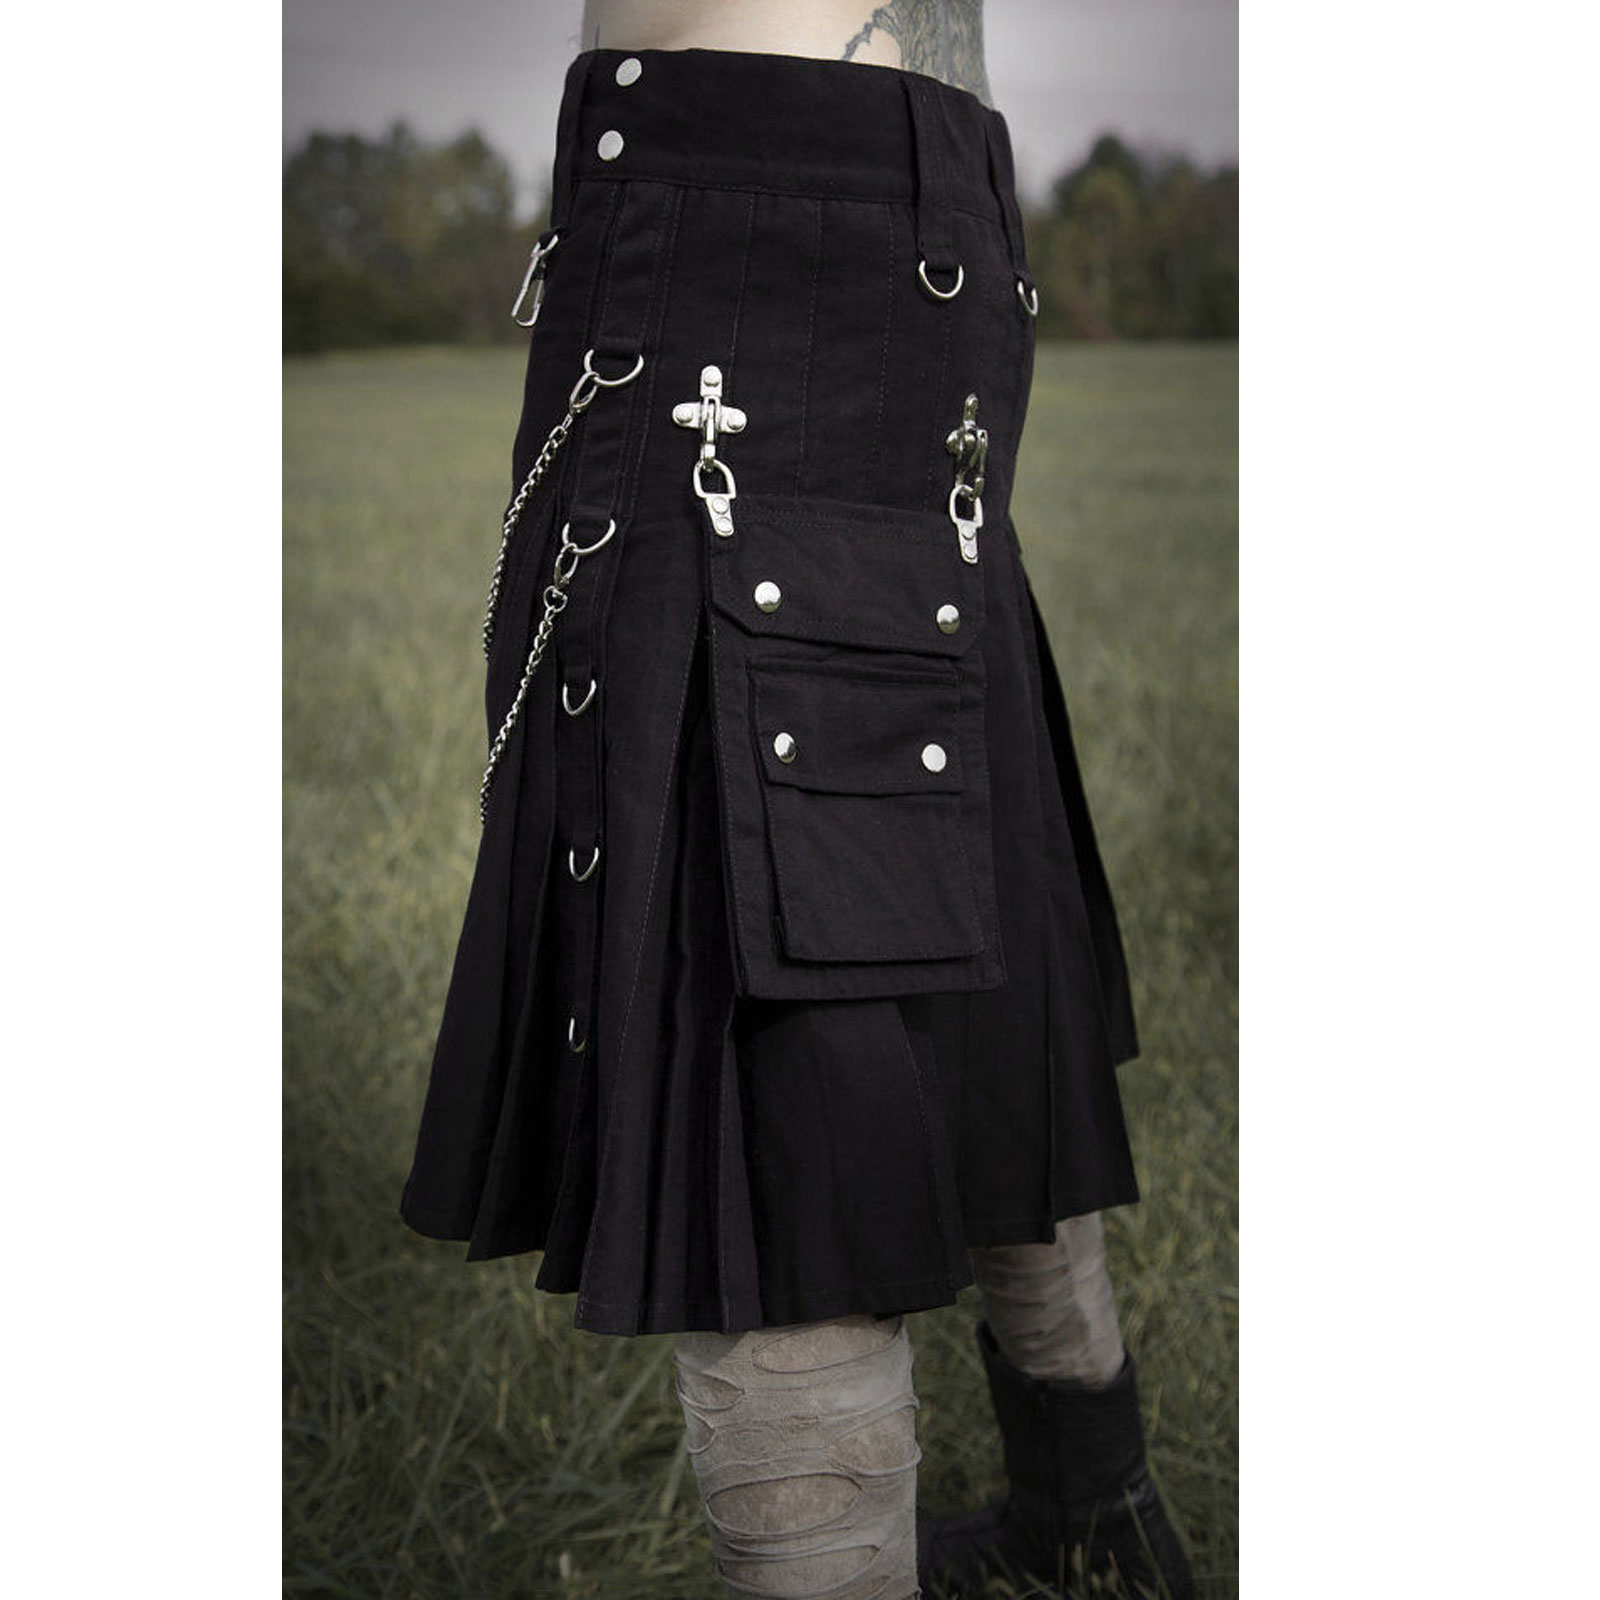 Black Gothic Utility Kilt Detachable Pockets Modern Gothic Fashion Active Men 